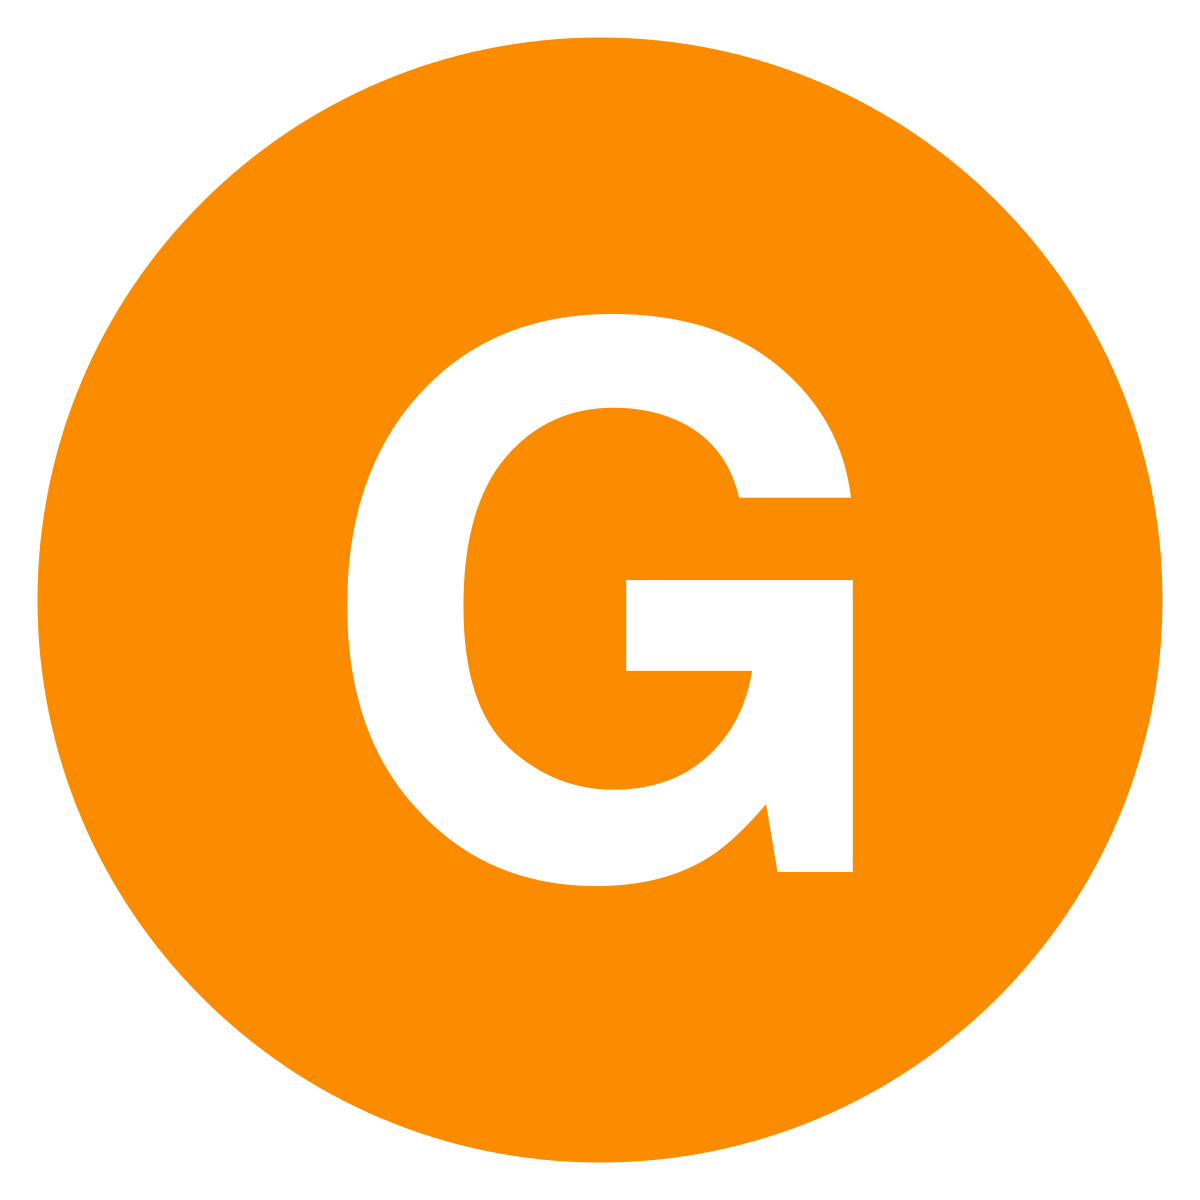 File:Eo circle orange letter-g.svg - Wikimedia Commons